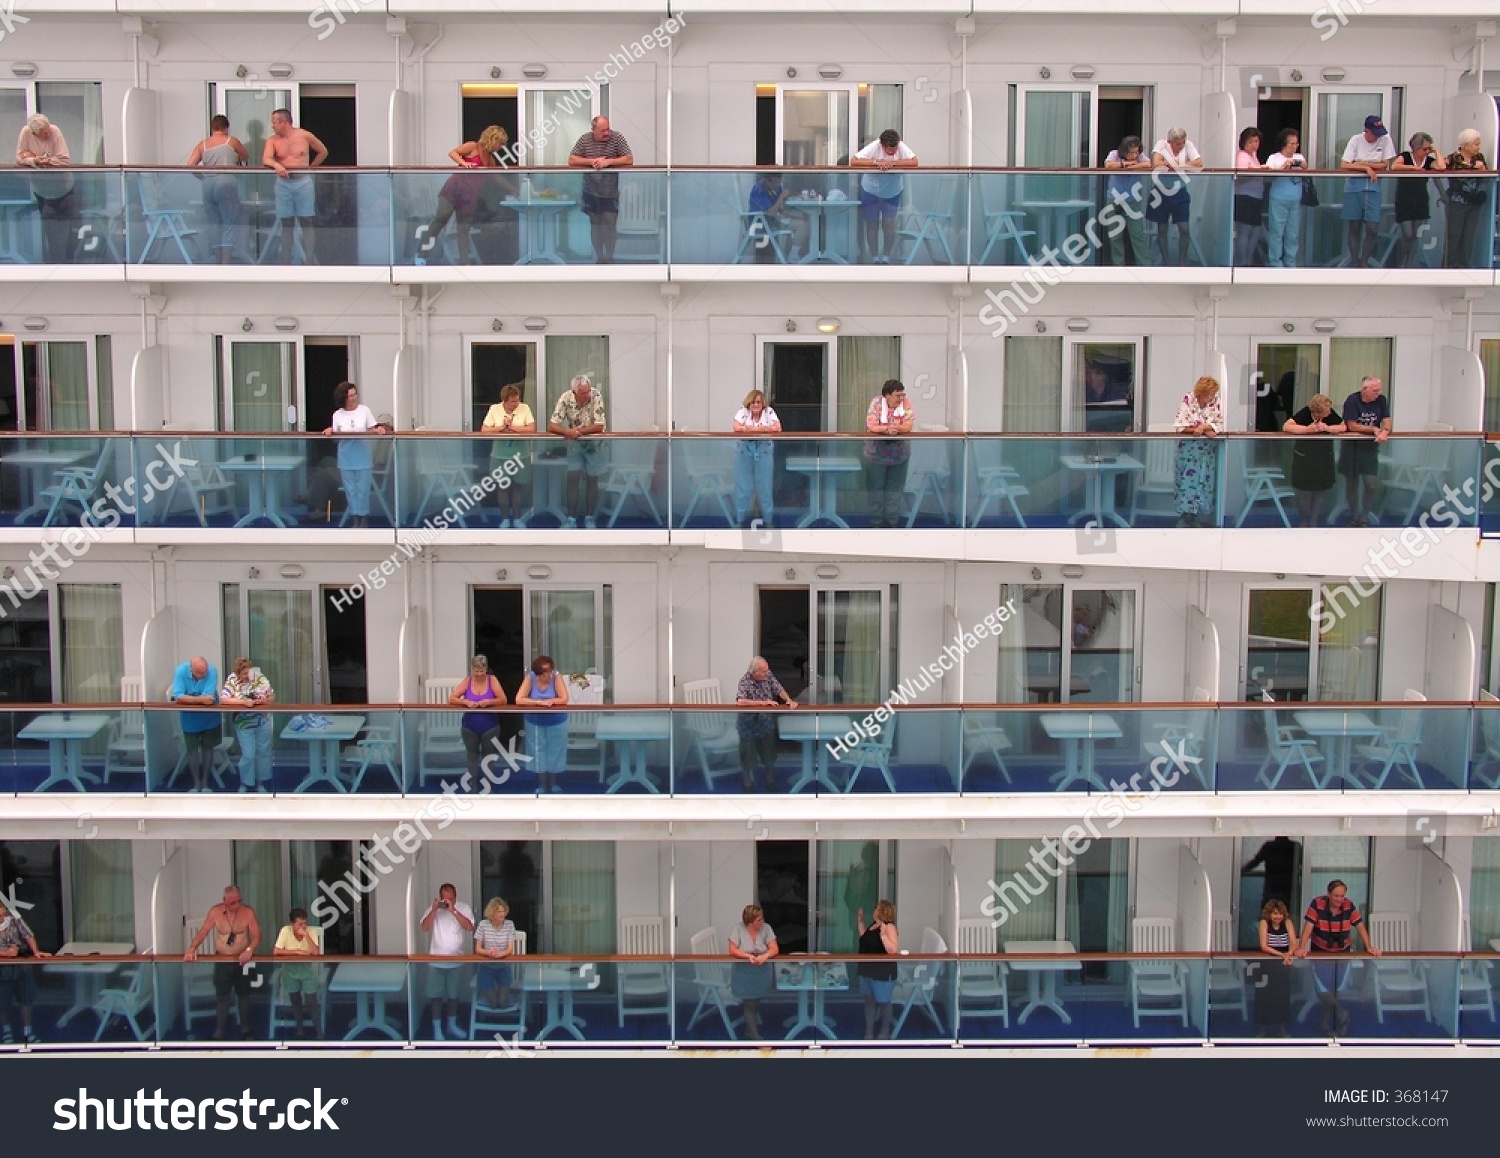 albana xhelilaj recommends nude on cruise ship balcony pic